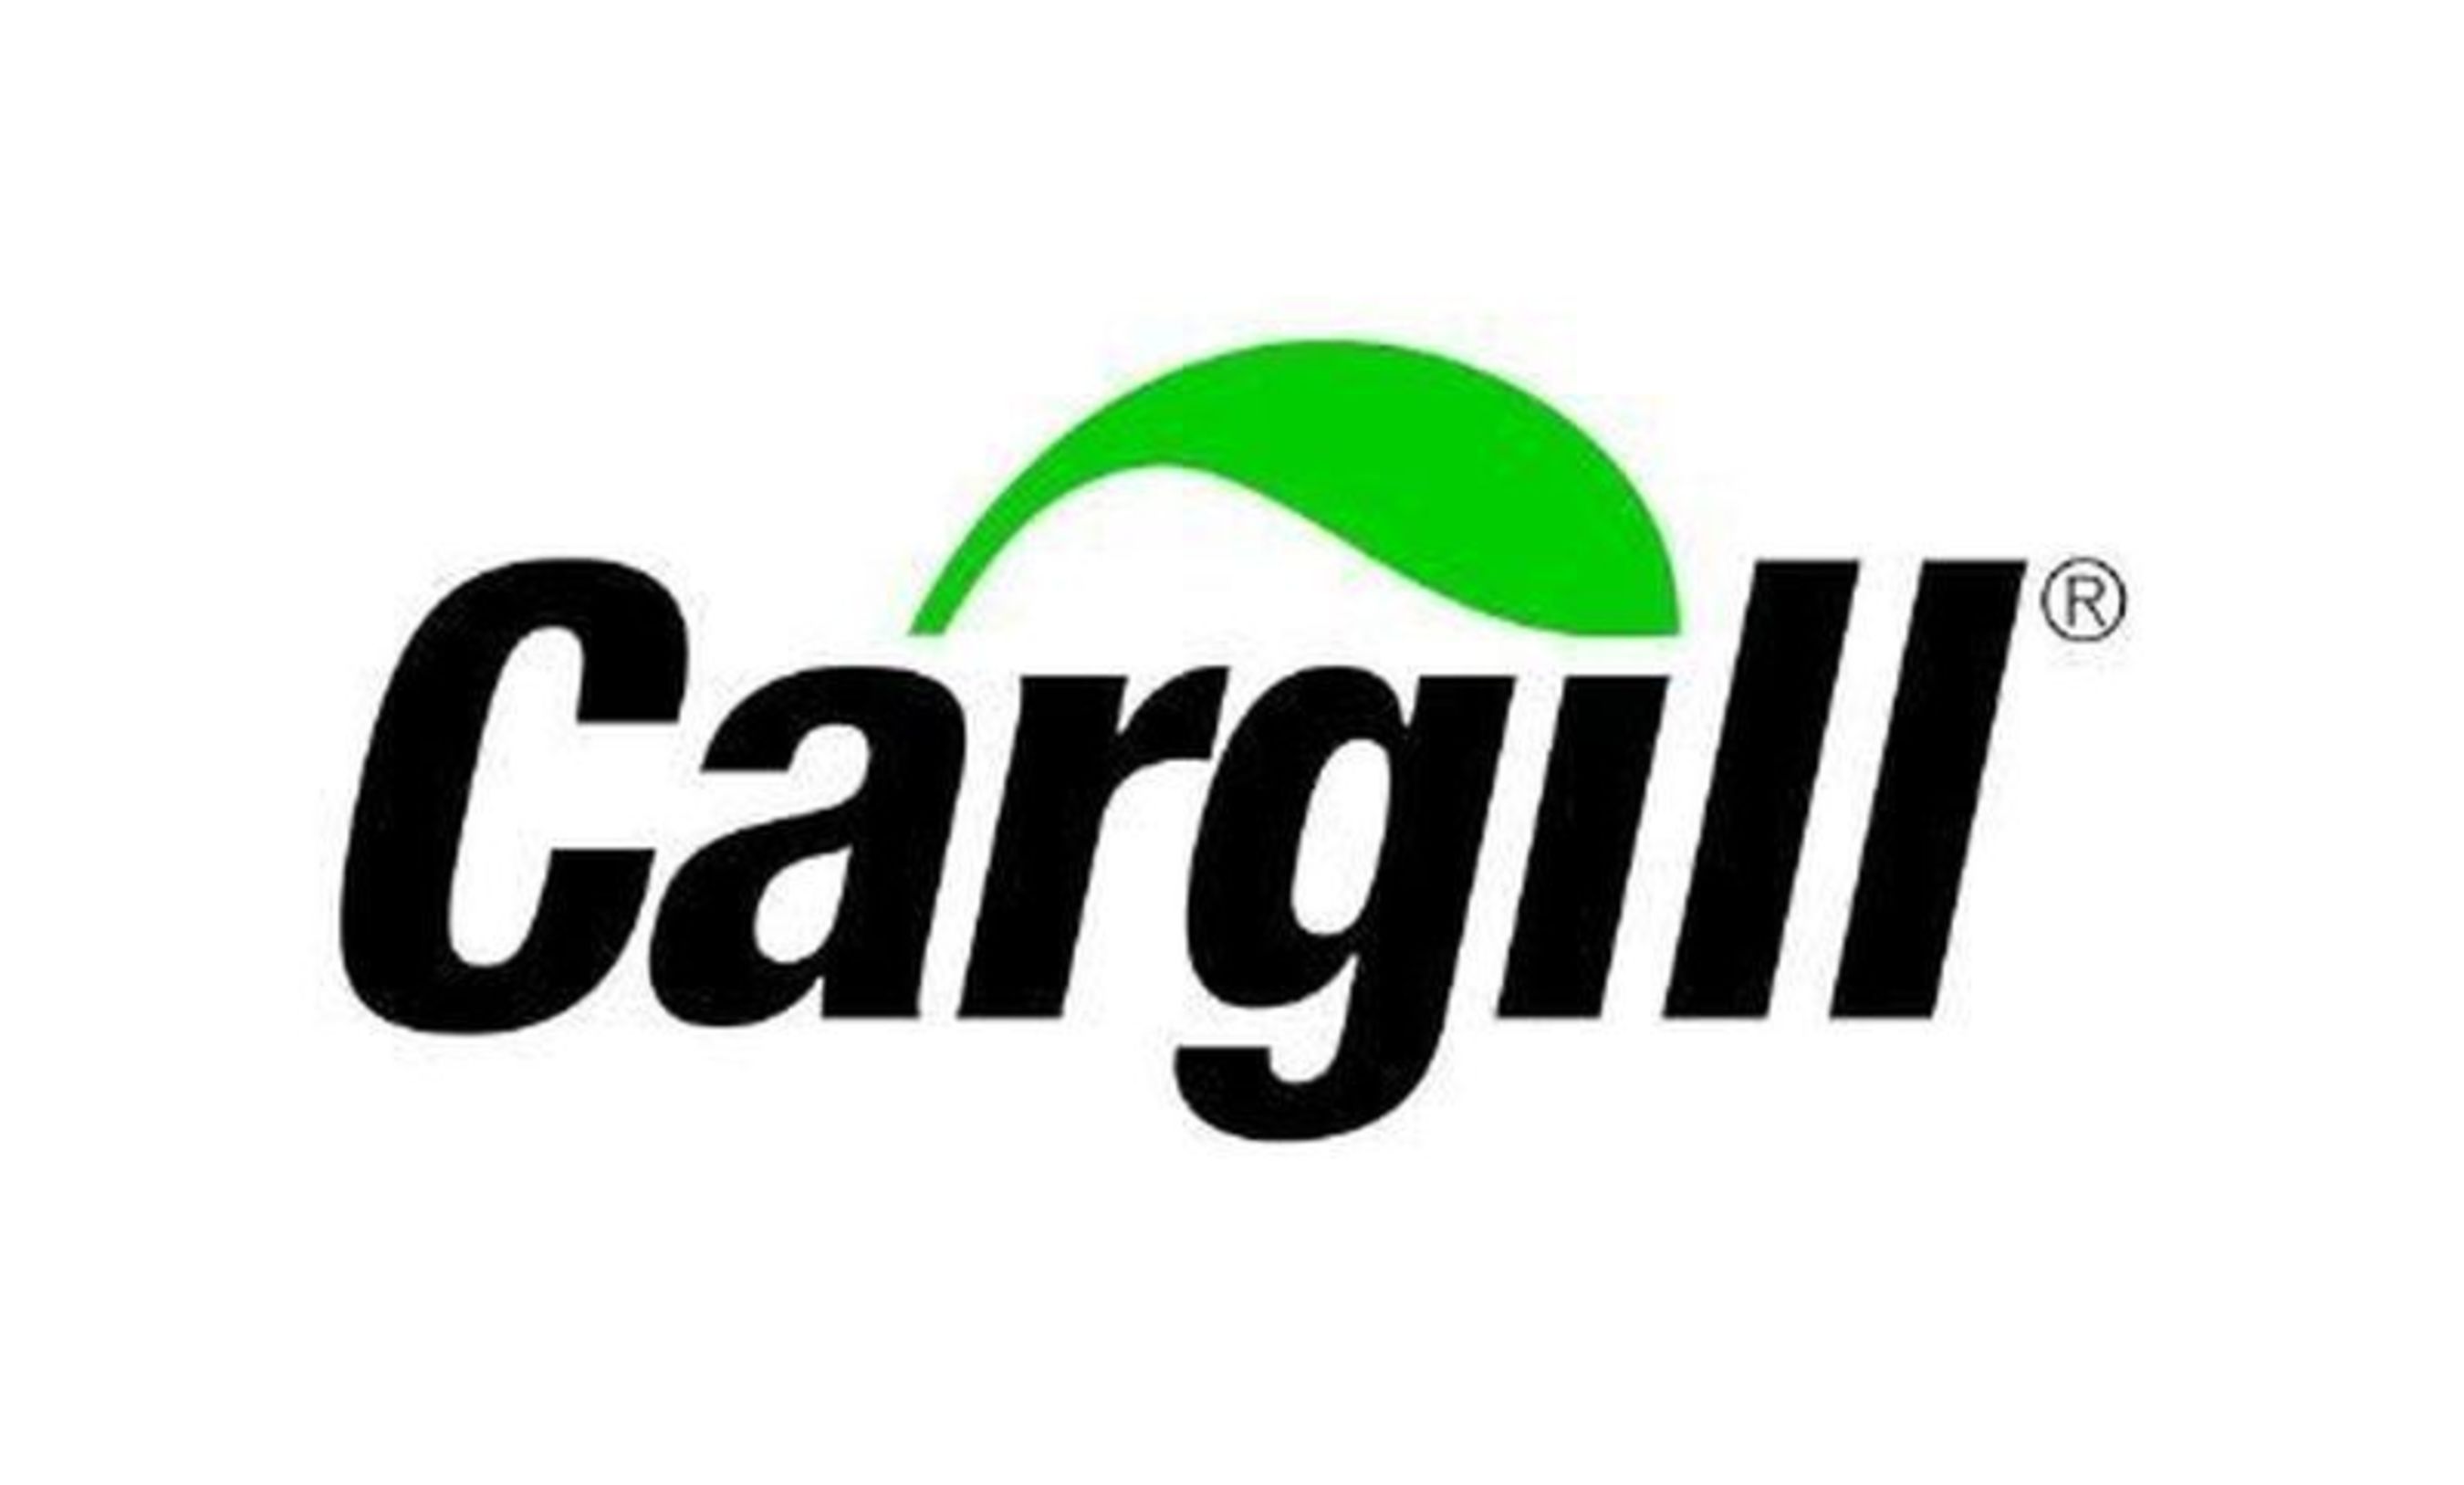 Cargill (PRNewsFoto/Cargill)